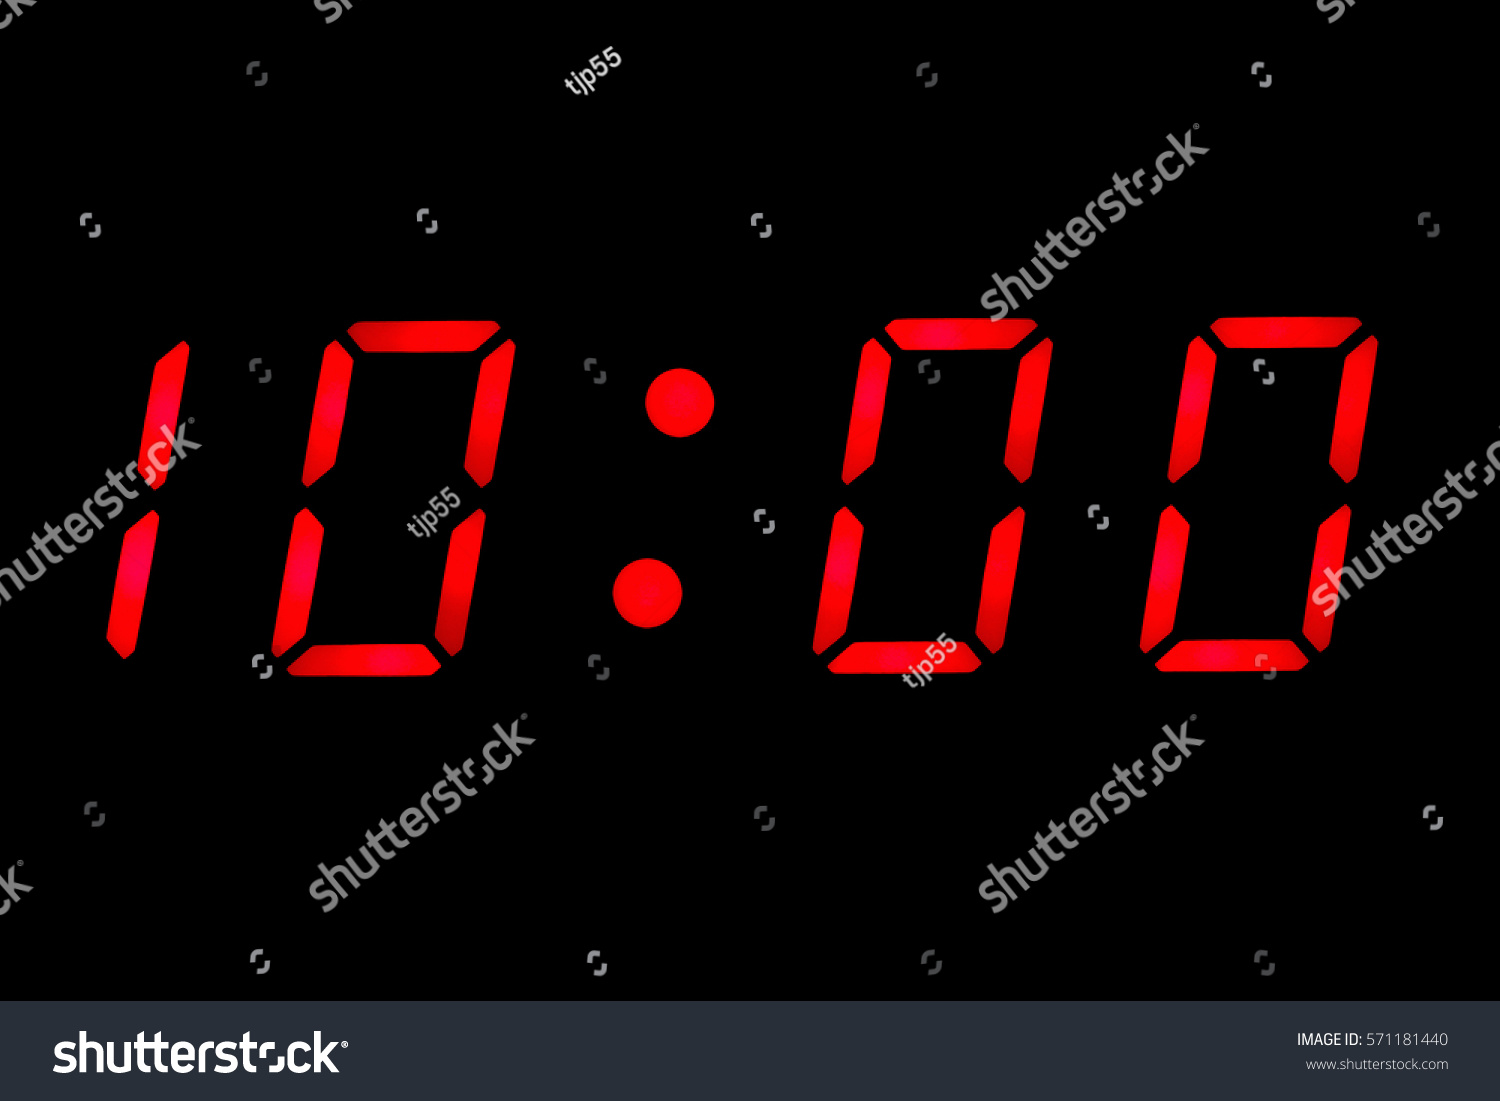 Digital Clock Closeup Displaying 1000 Oclock Stock Illustration